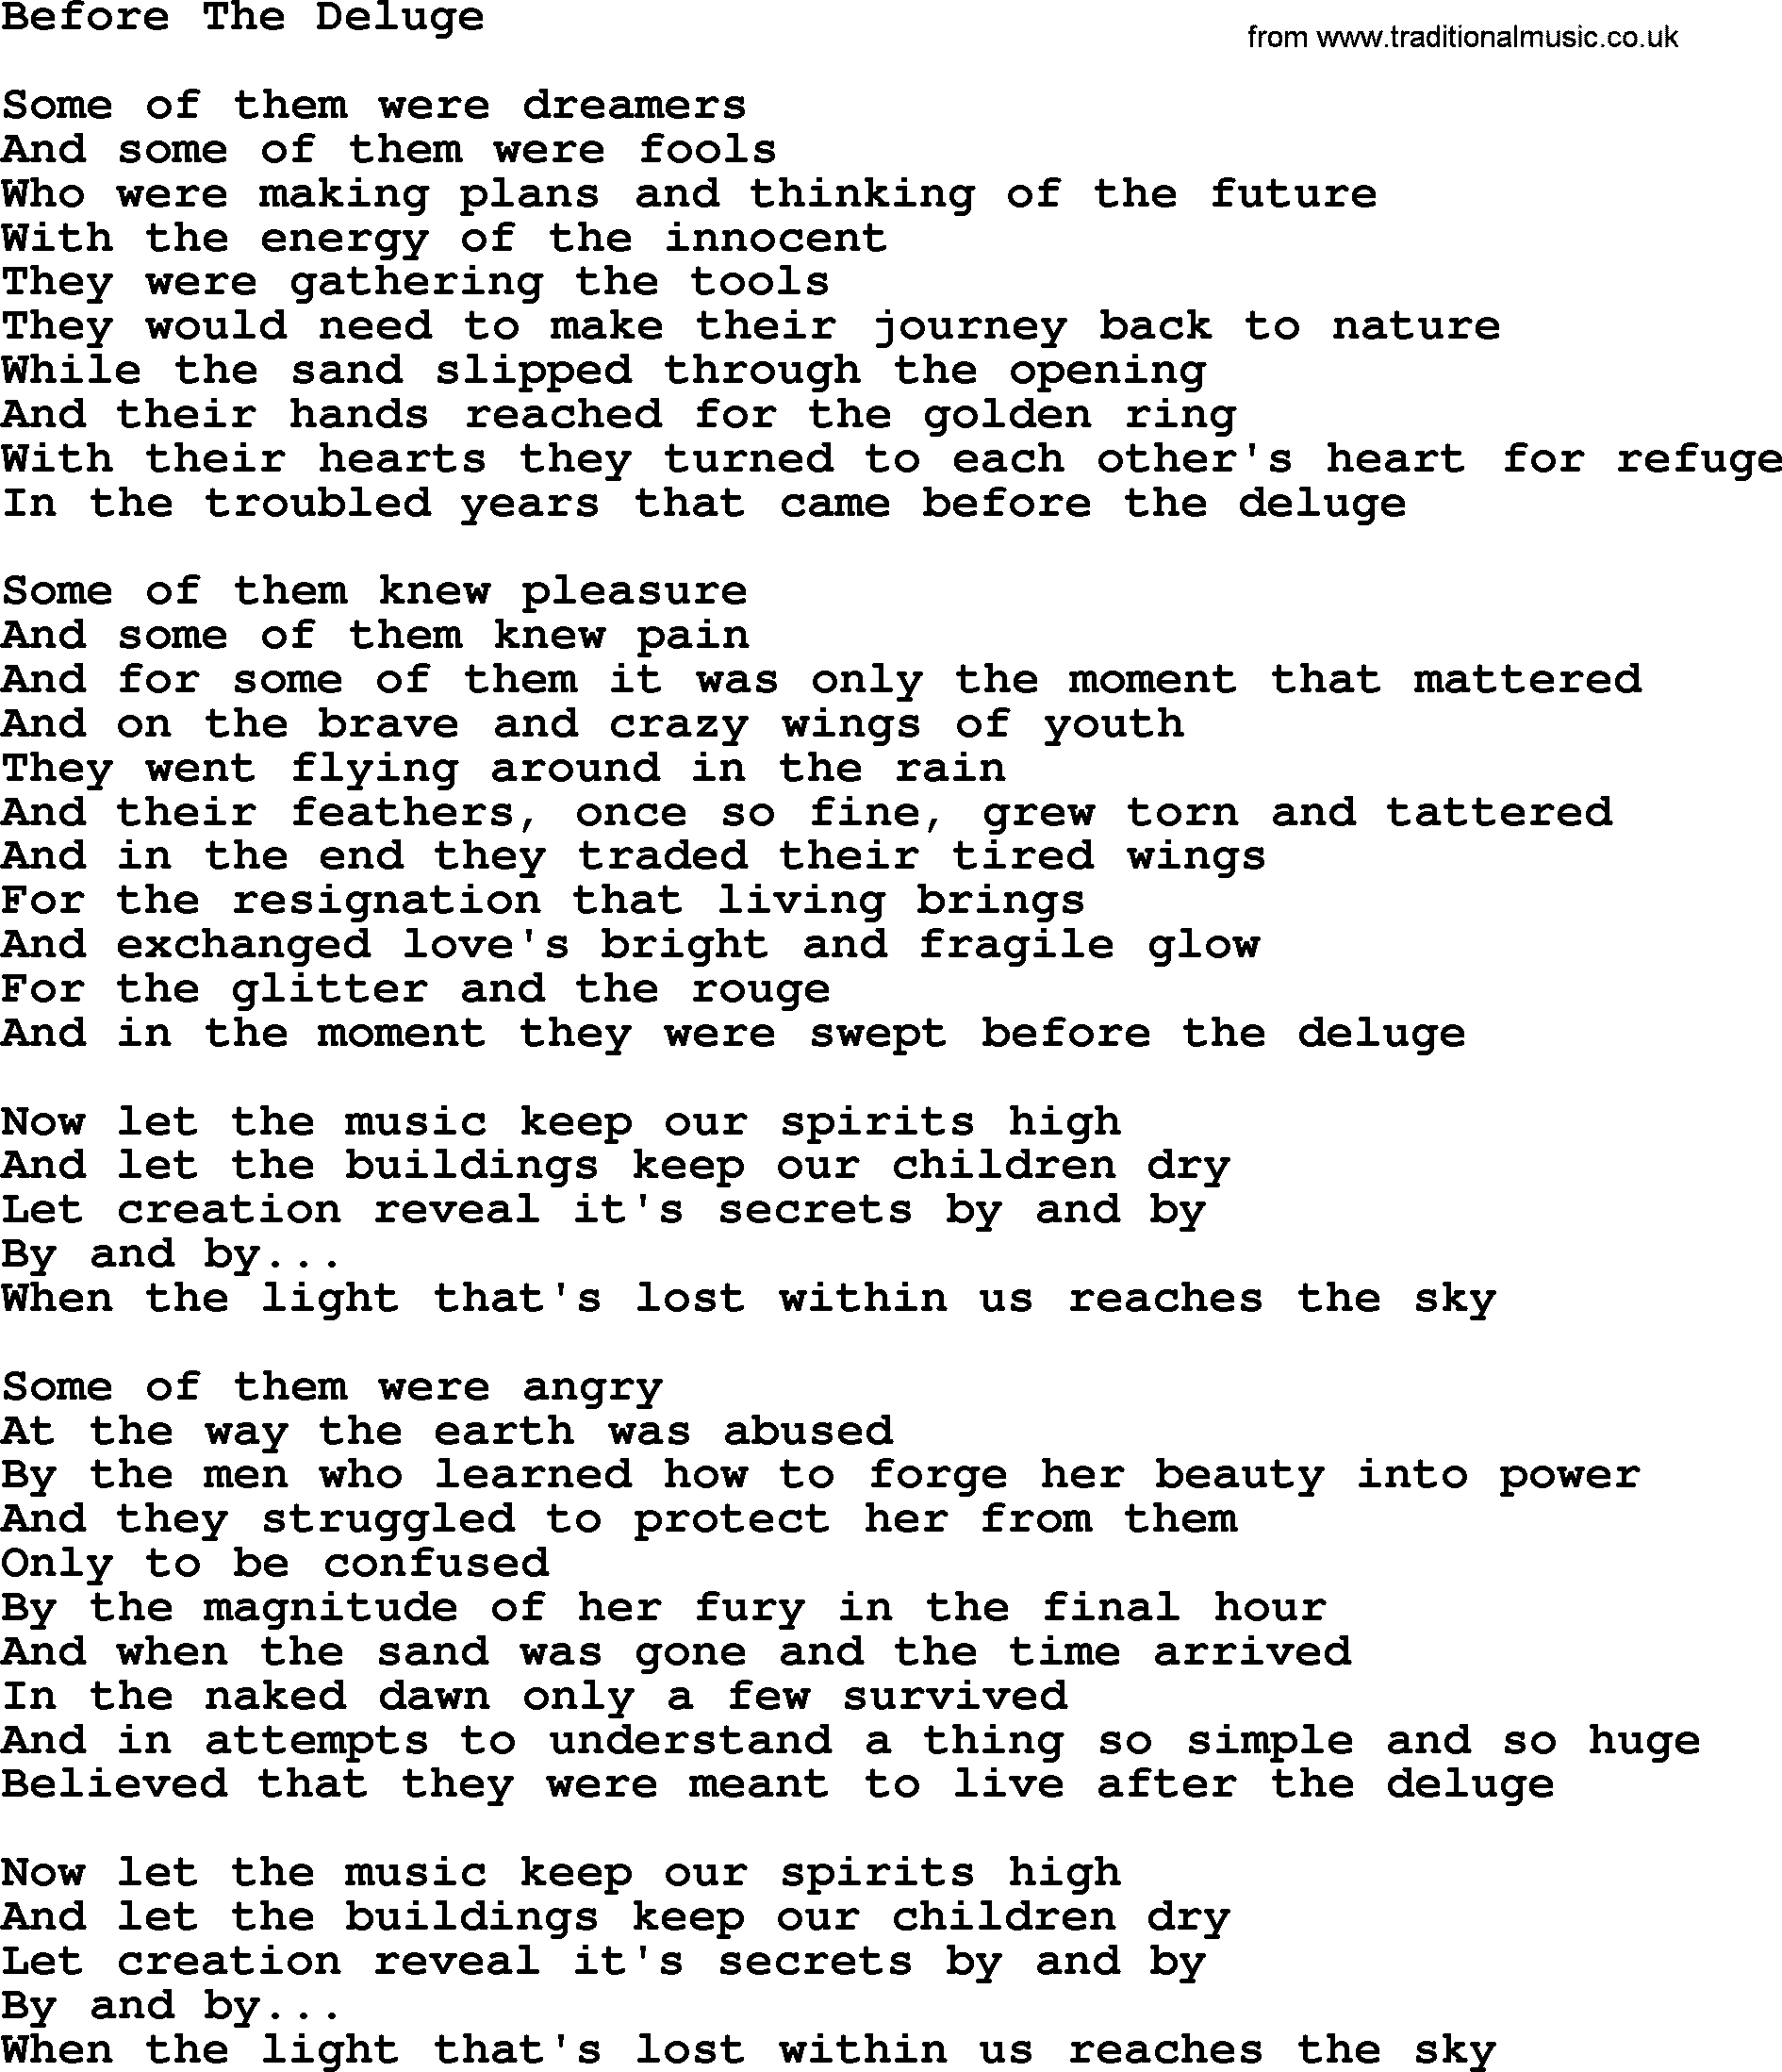 Joan Baez song Before The Deluge, lyrics